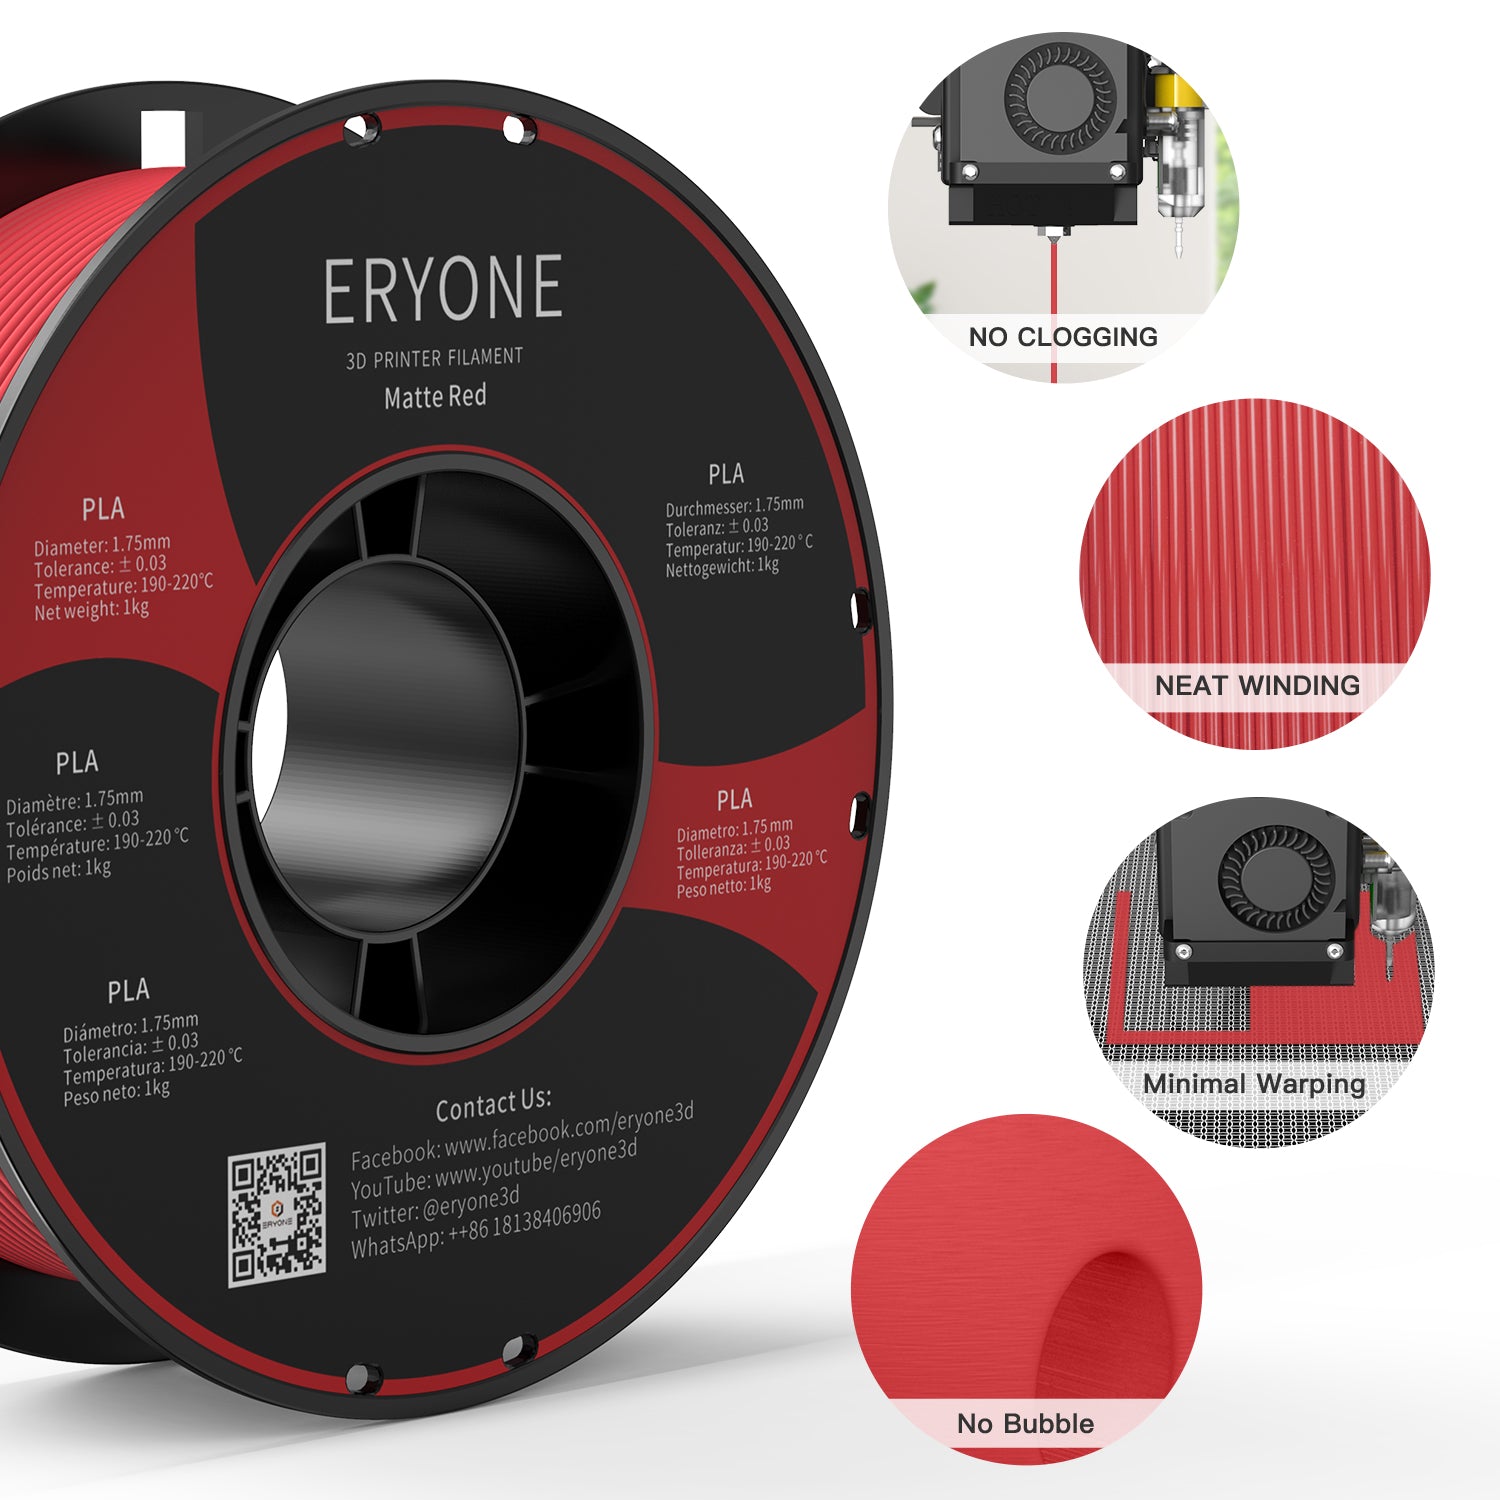 ERYONE Filament PLA mat, 1.75mm Filament pour imprimante 3D, 1KG(2.2LBS)/ Bobine